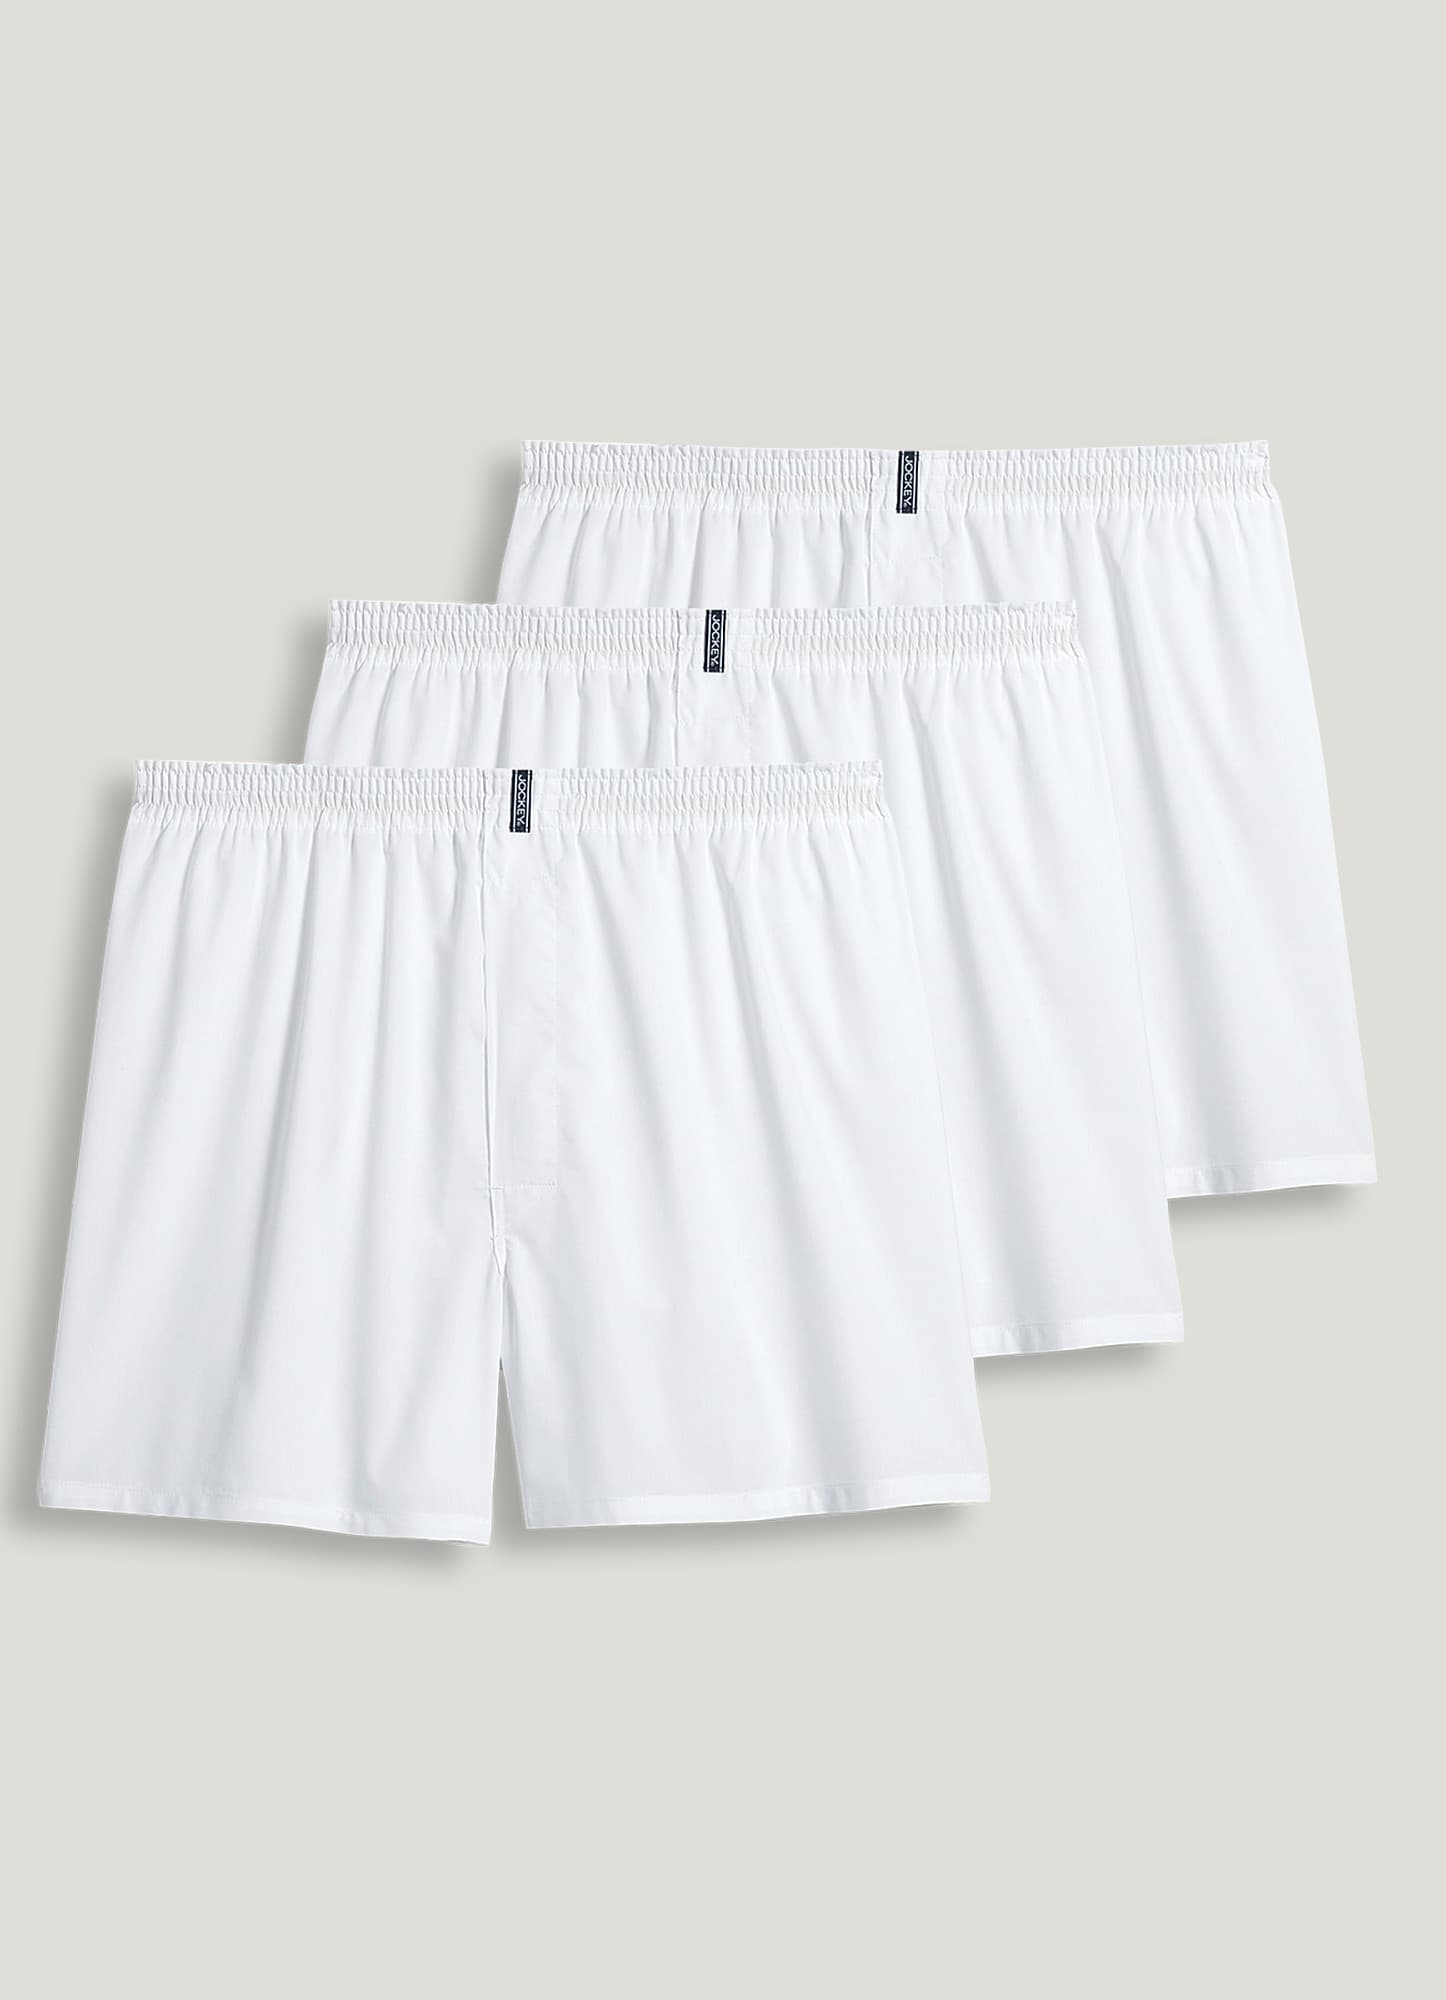 Jockey Men's 2pk White Pouch Boxer Briefs style #1146 – The Right Choice